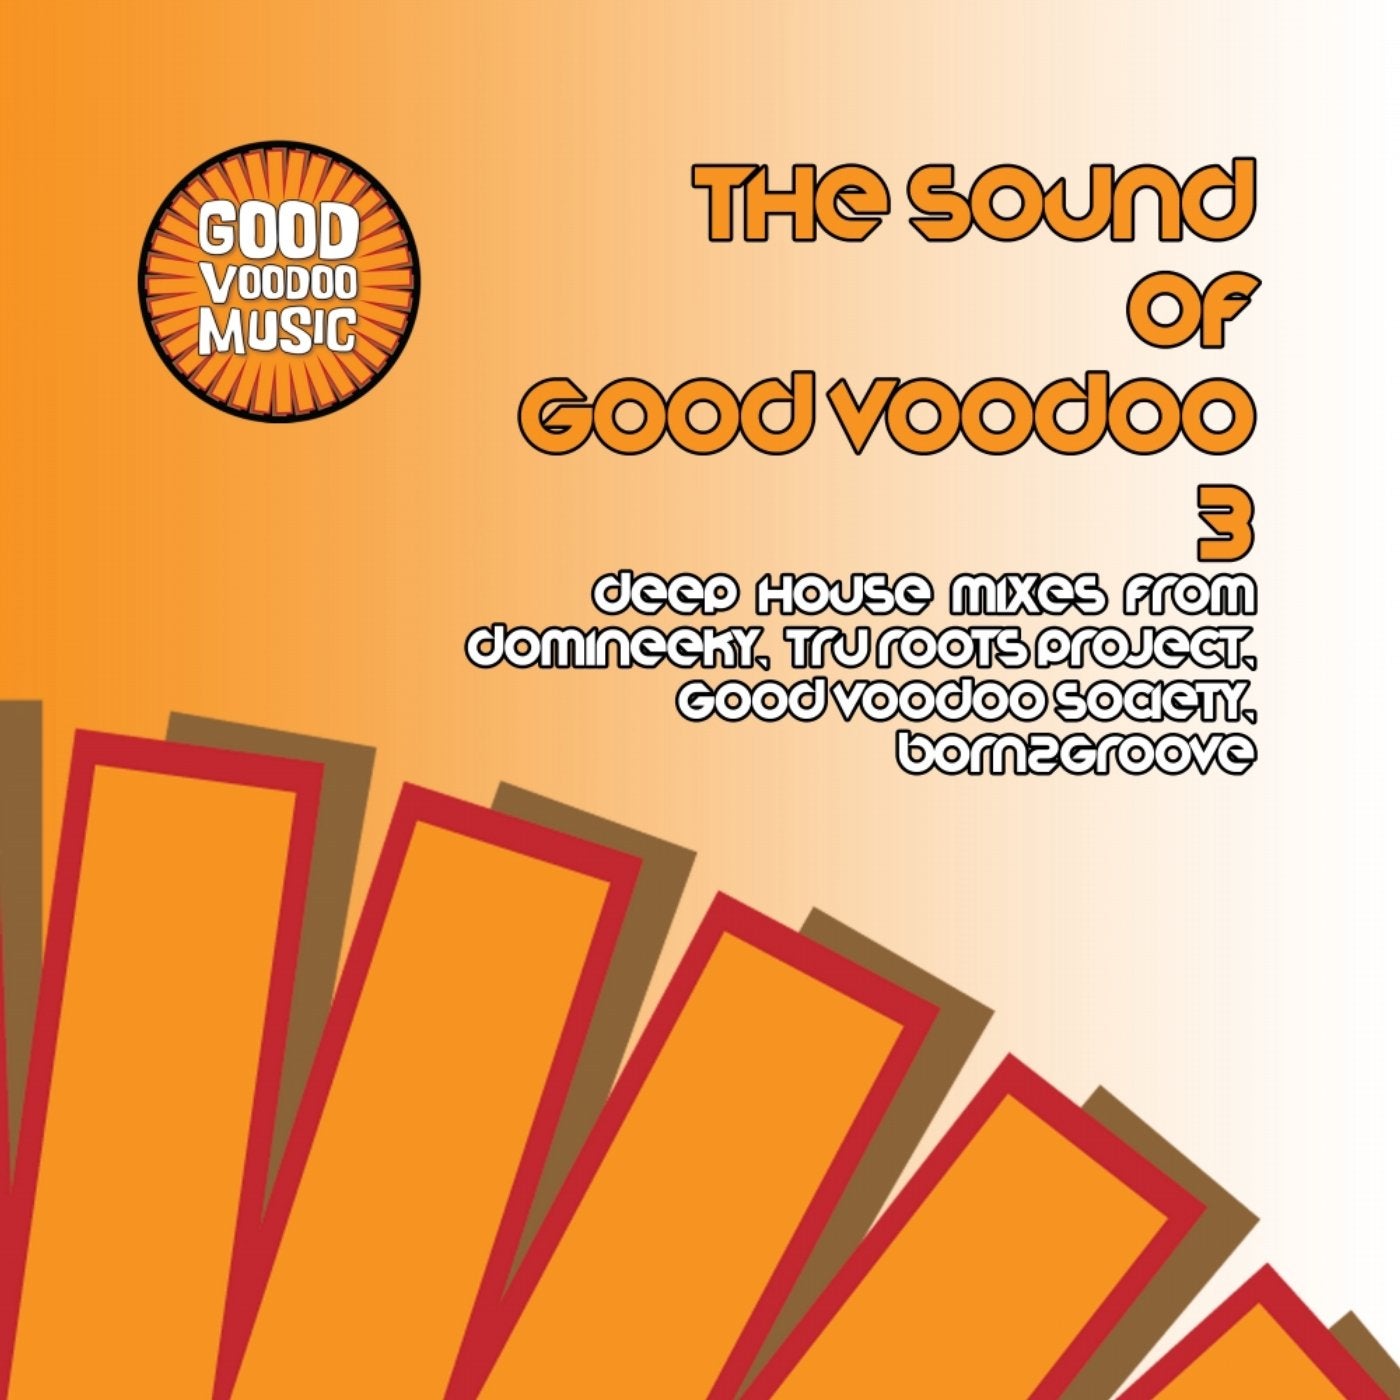 The Sound Of Good Voodoo 3